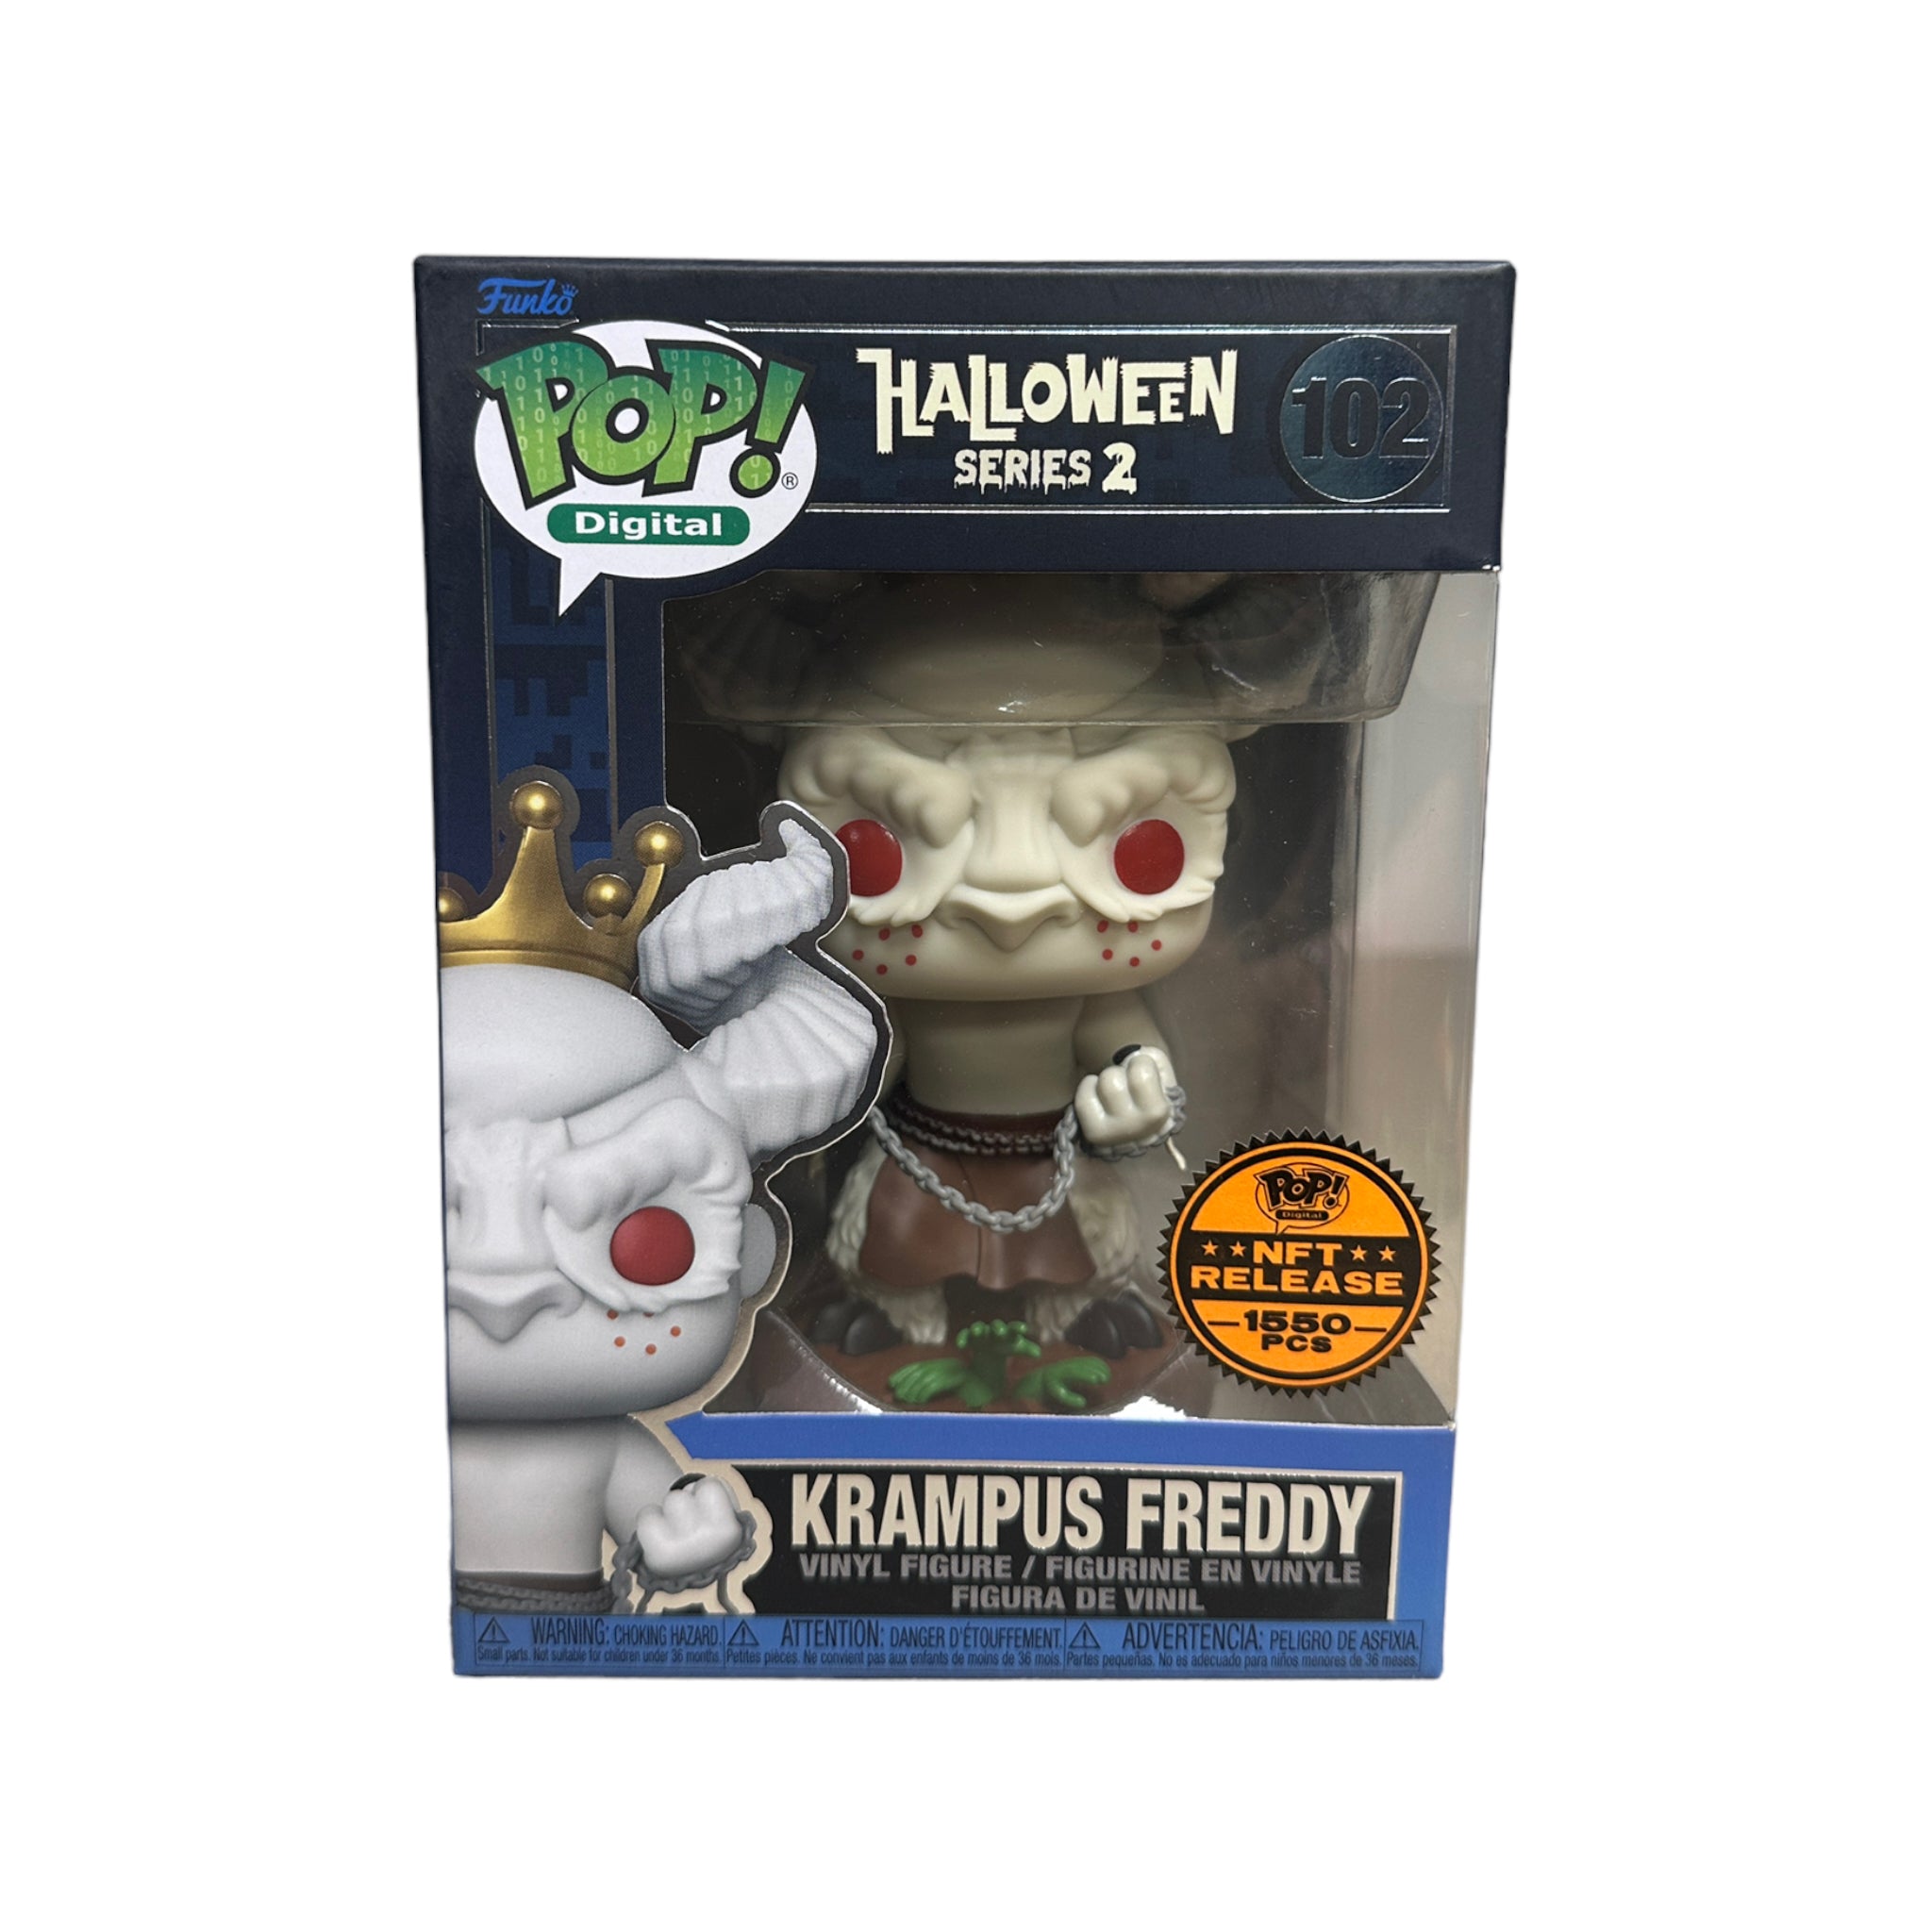 Krampus Freddy #102 Funko Pop! - Halloween Series 2 - NFT Release Exclusive LE1550 Pcs - Condition 9/10